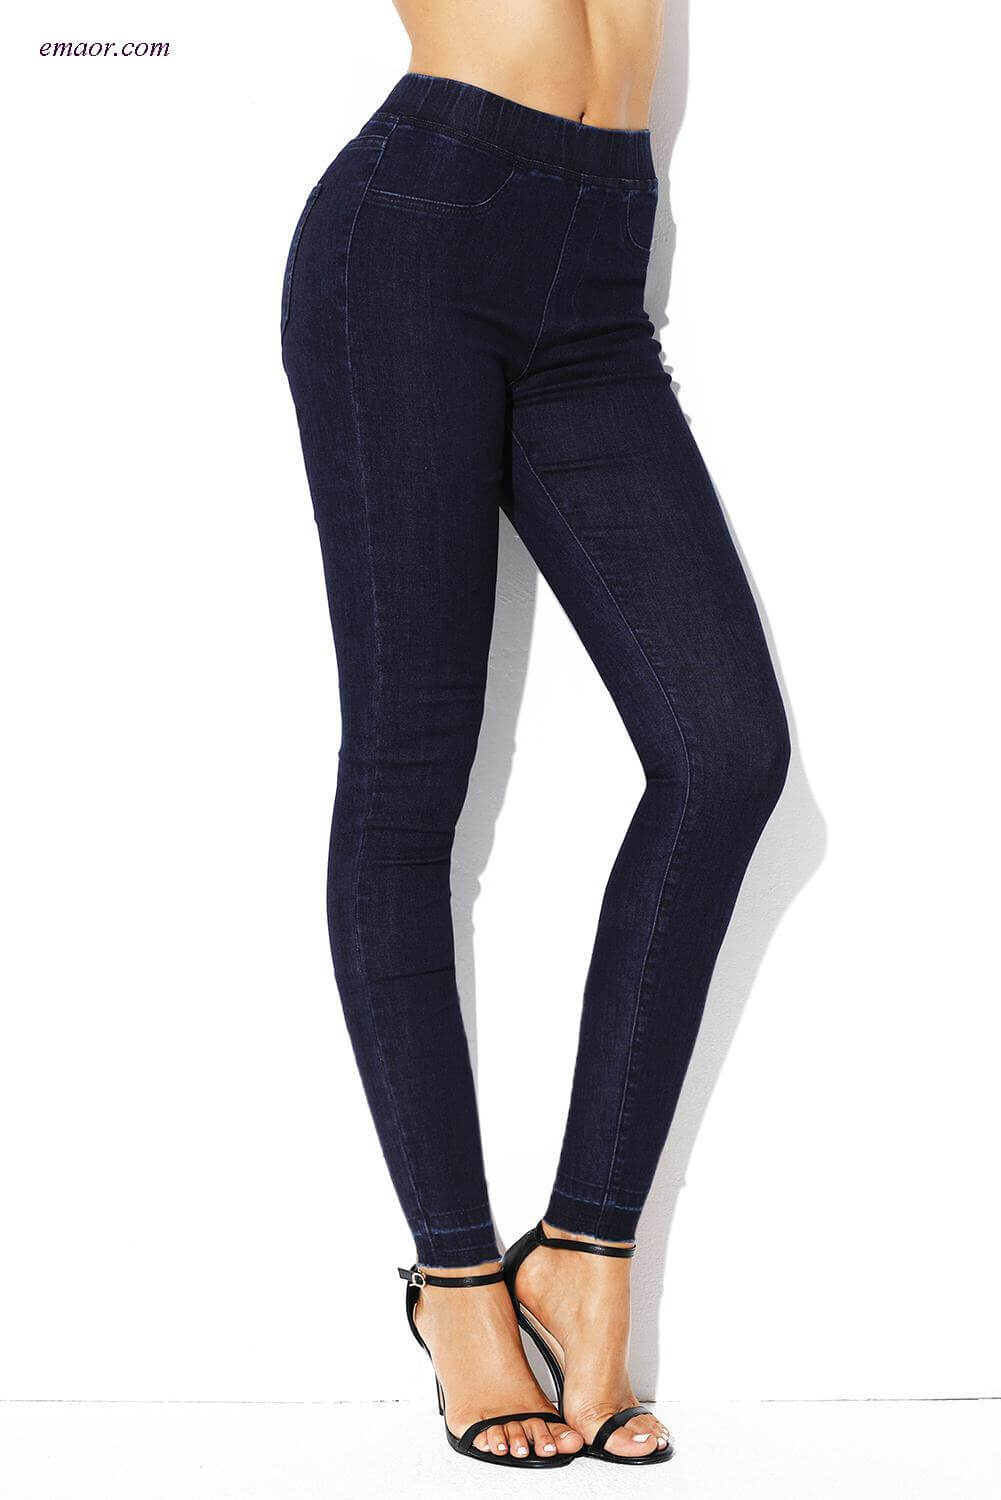 Jeans Wholesale Elastic Waist Jeans Stretch Pants for Women